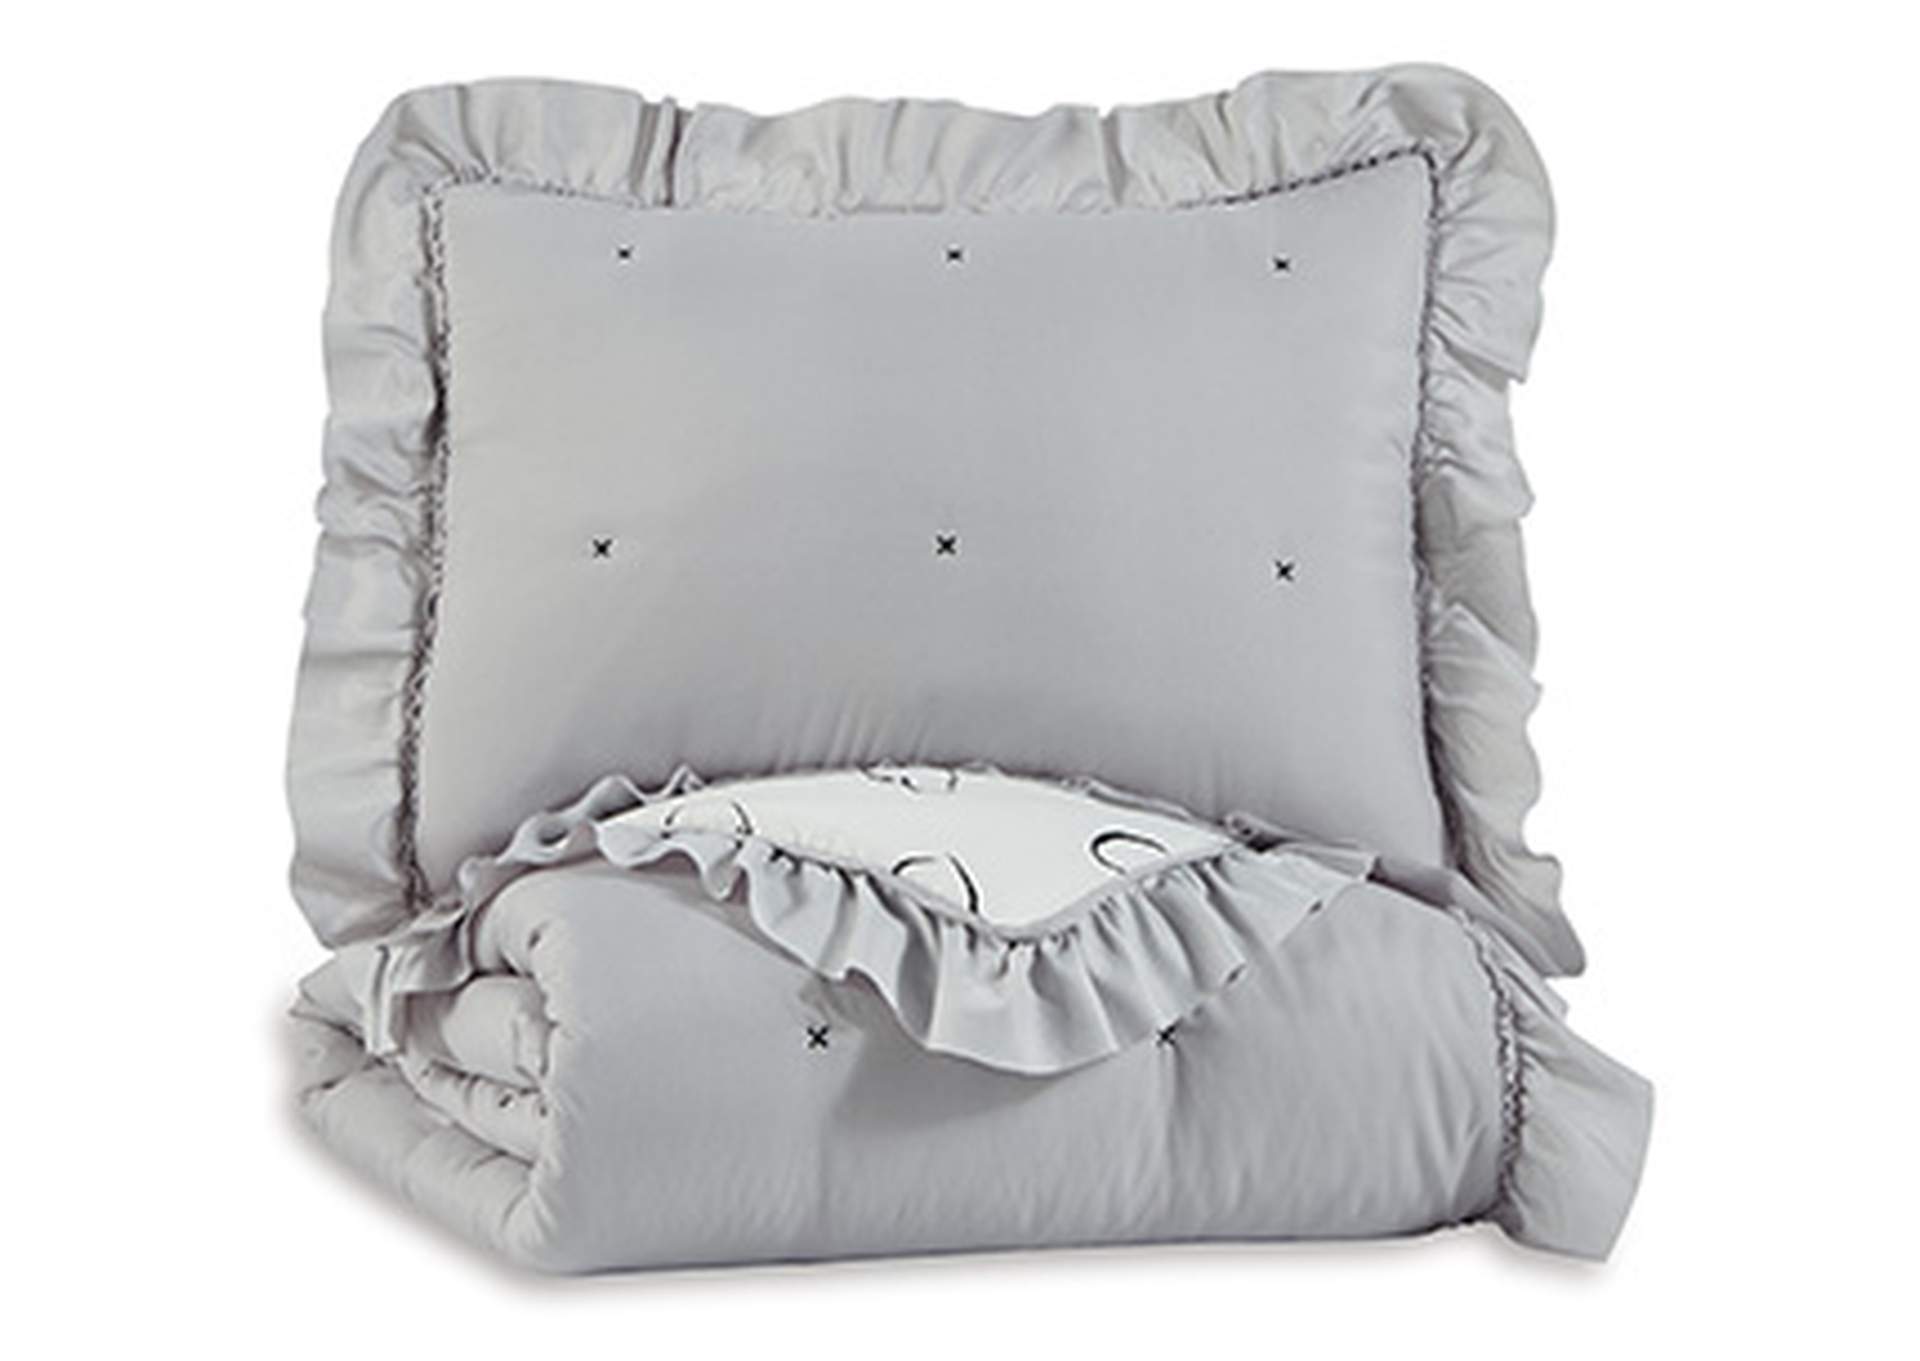 Hartlen Twin Comforter Set,Signature Design By Ashley